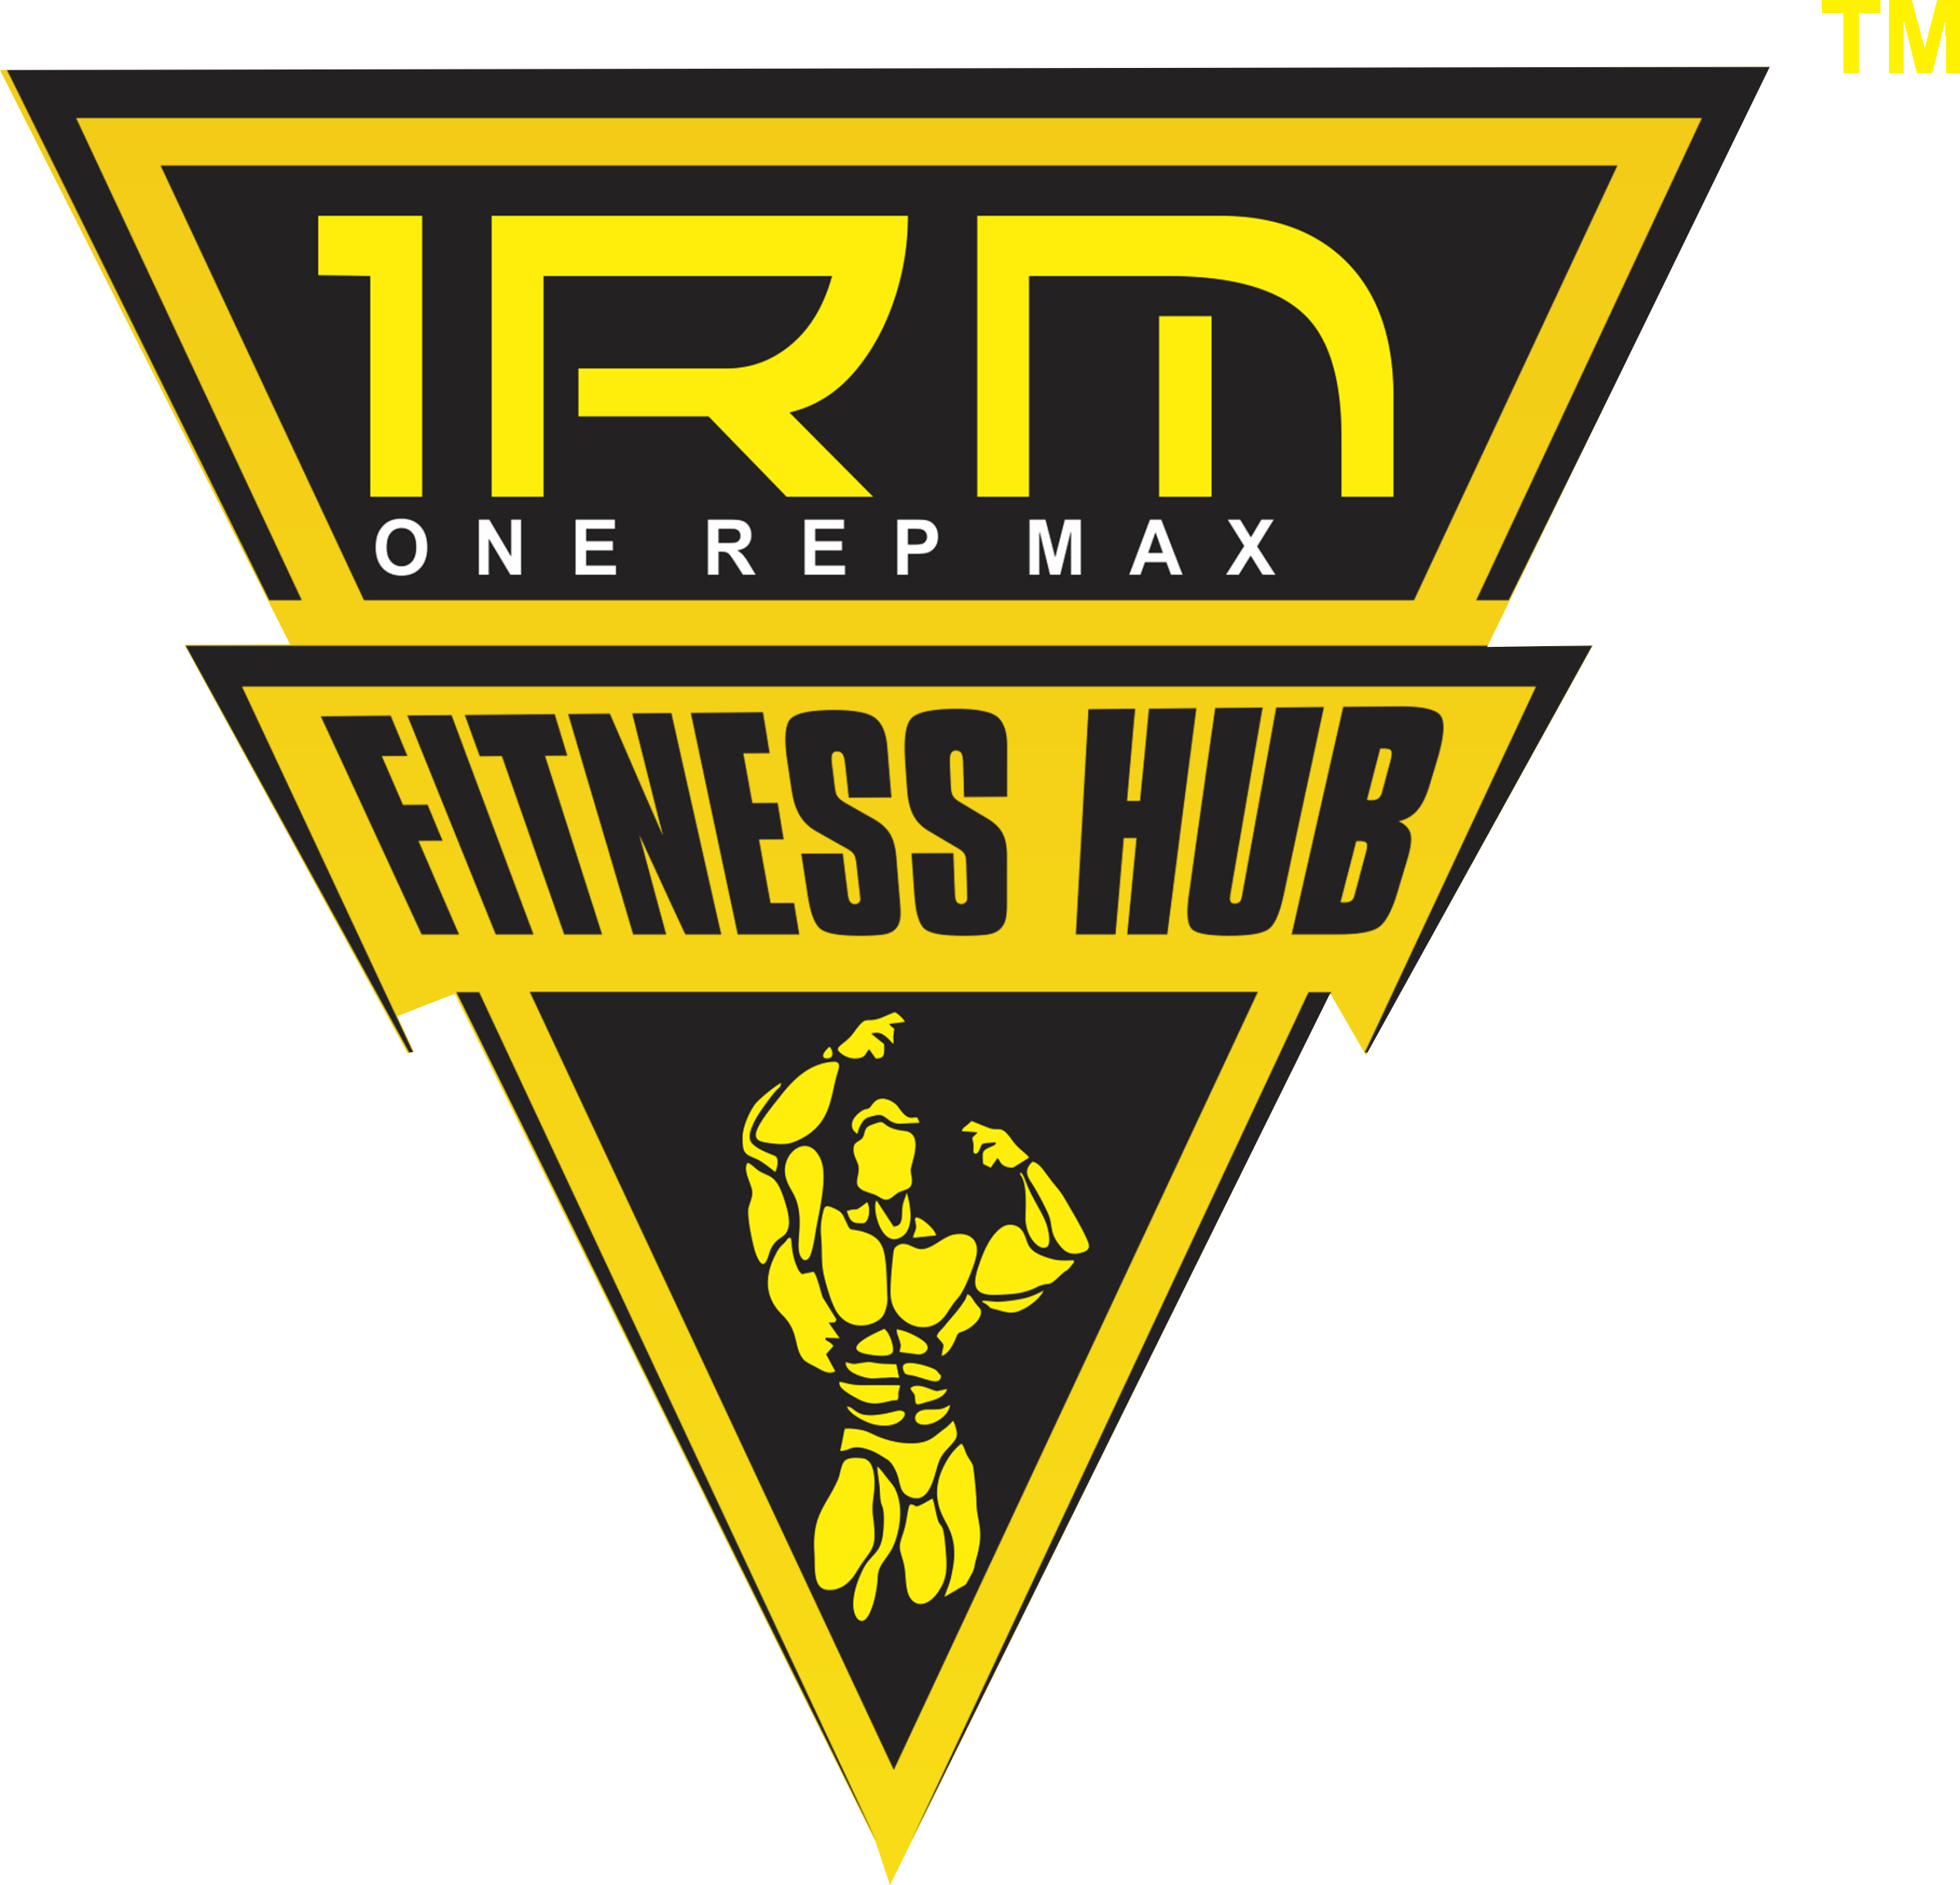 One rep max fitness hub - Logo